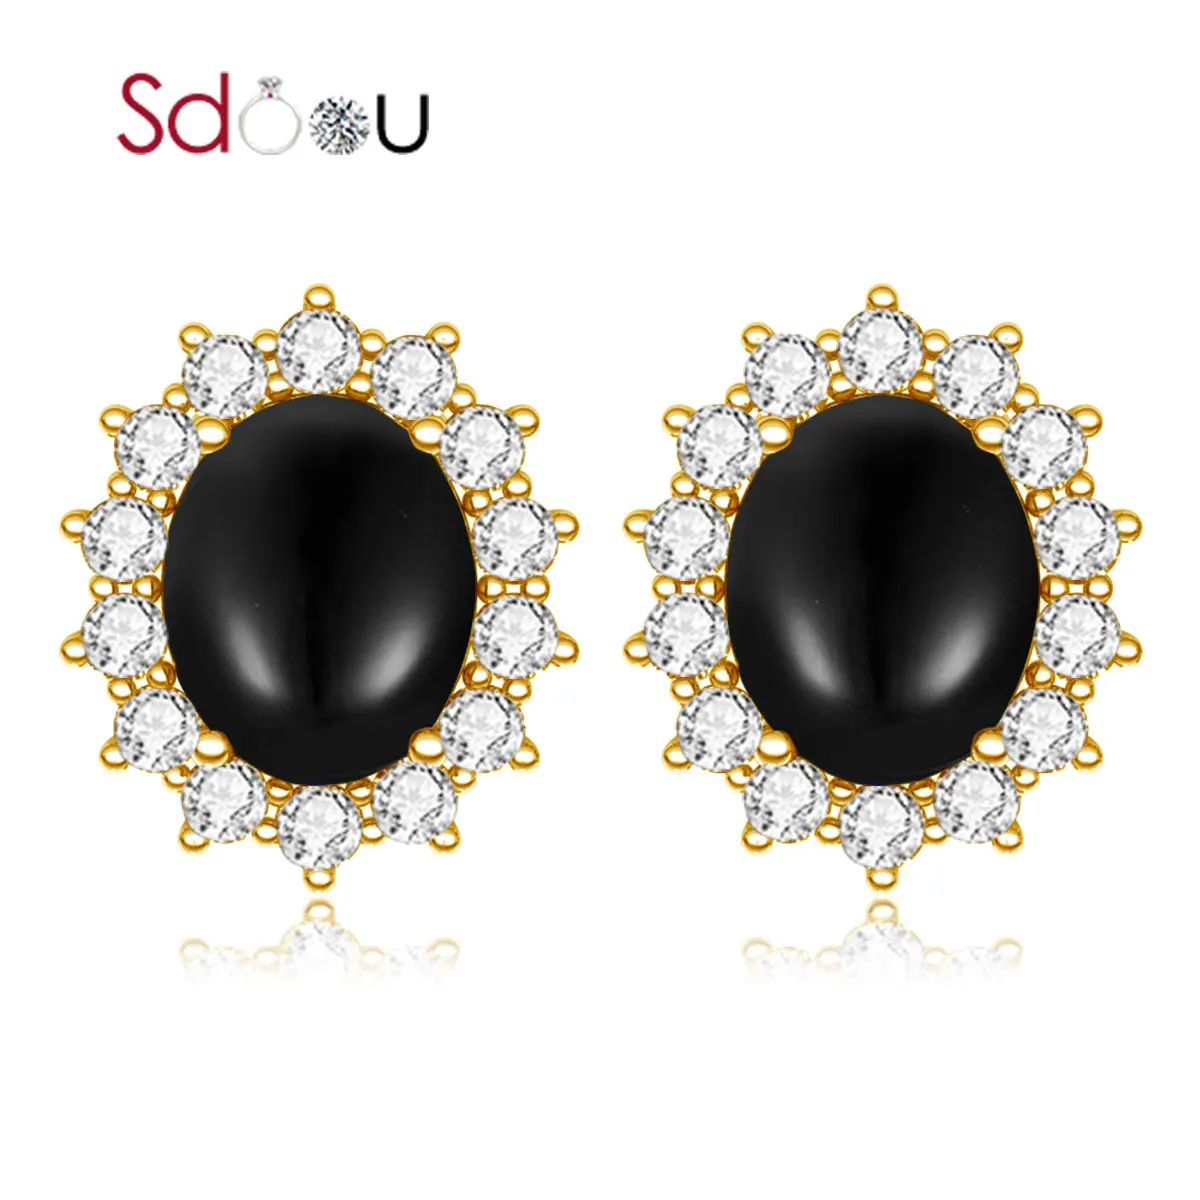 

SDOOU 14k Gold Earring For Women Sterling Silver 925 Stud Earrings Punk Black Onyx With Sunflower Gemstone Fashion Jewelry Gift